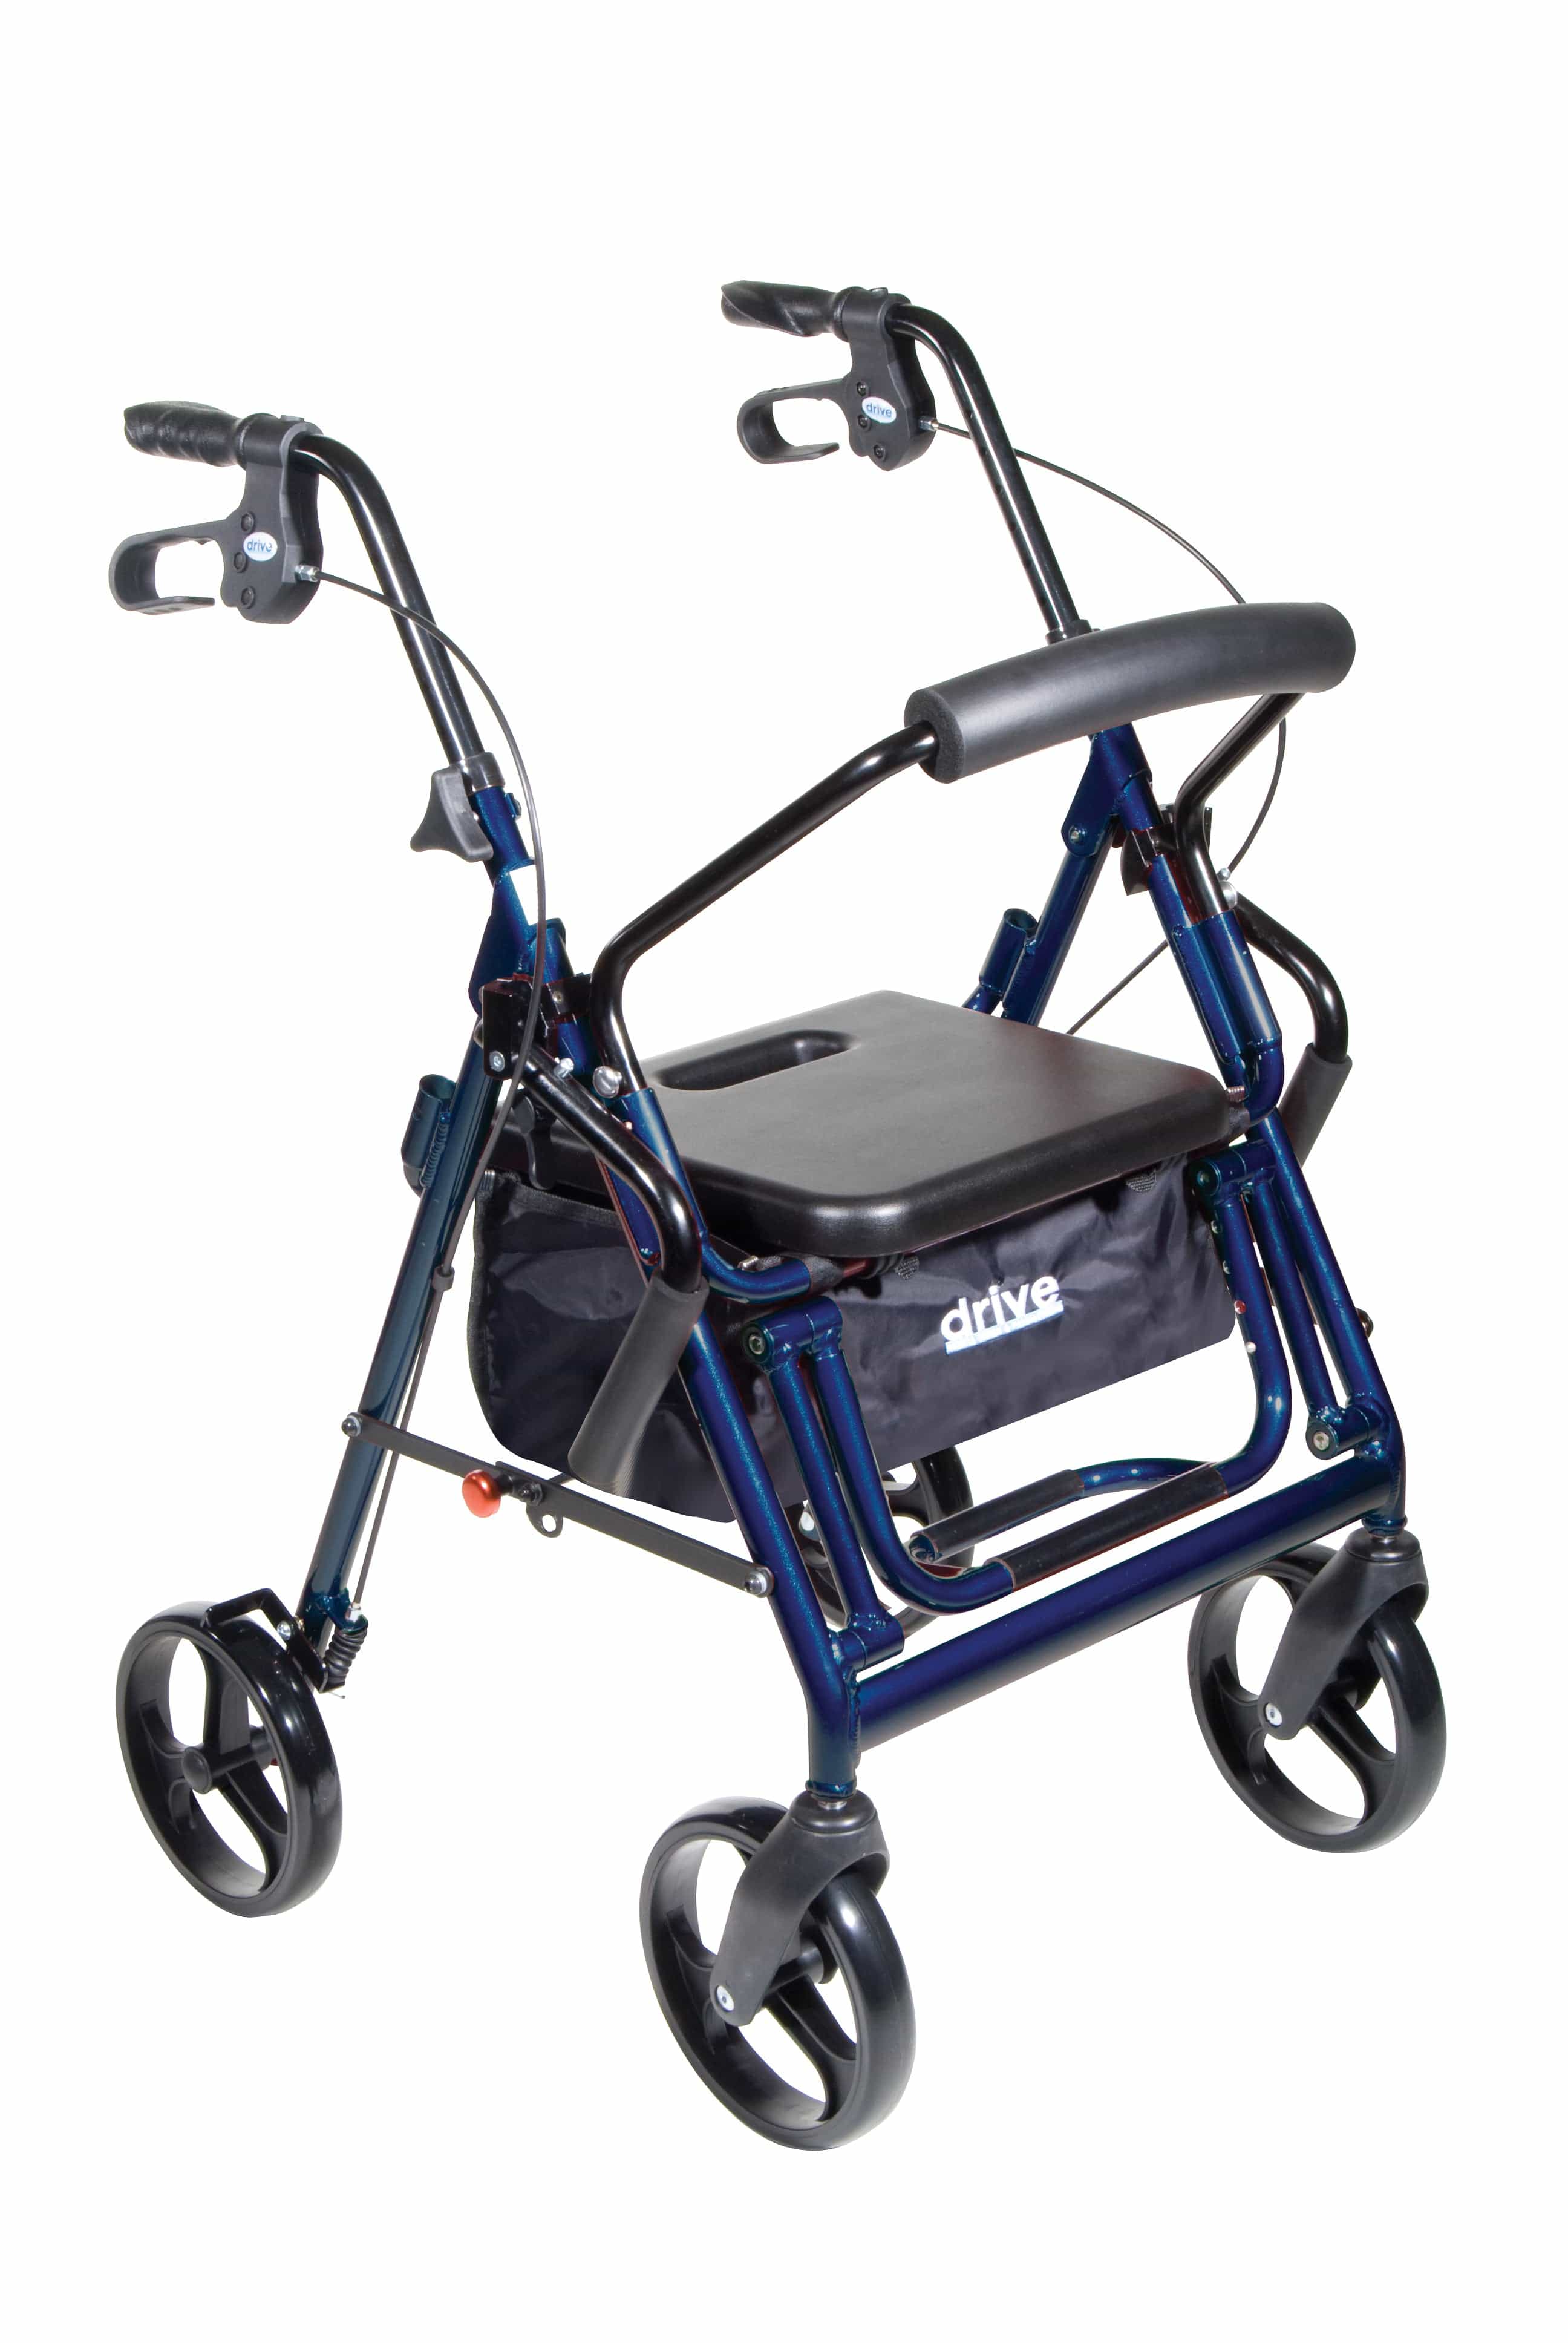 Drive Medical Drive Medical Duet Dual Function Transport Wheelchair Rollator Rolling Walker 795b